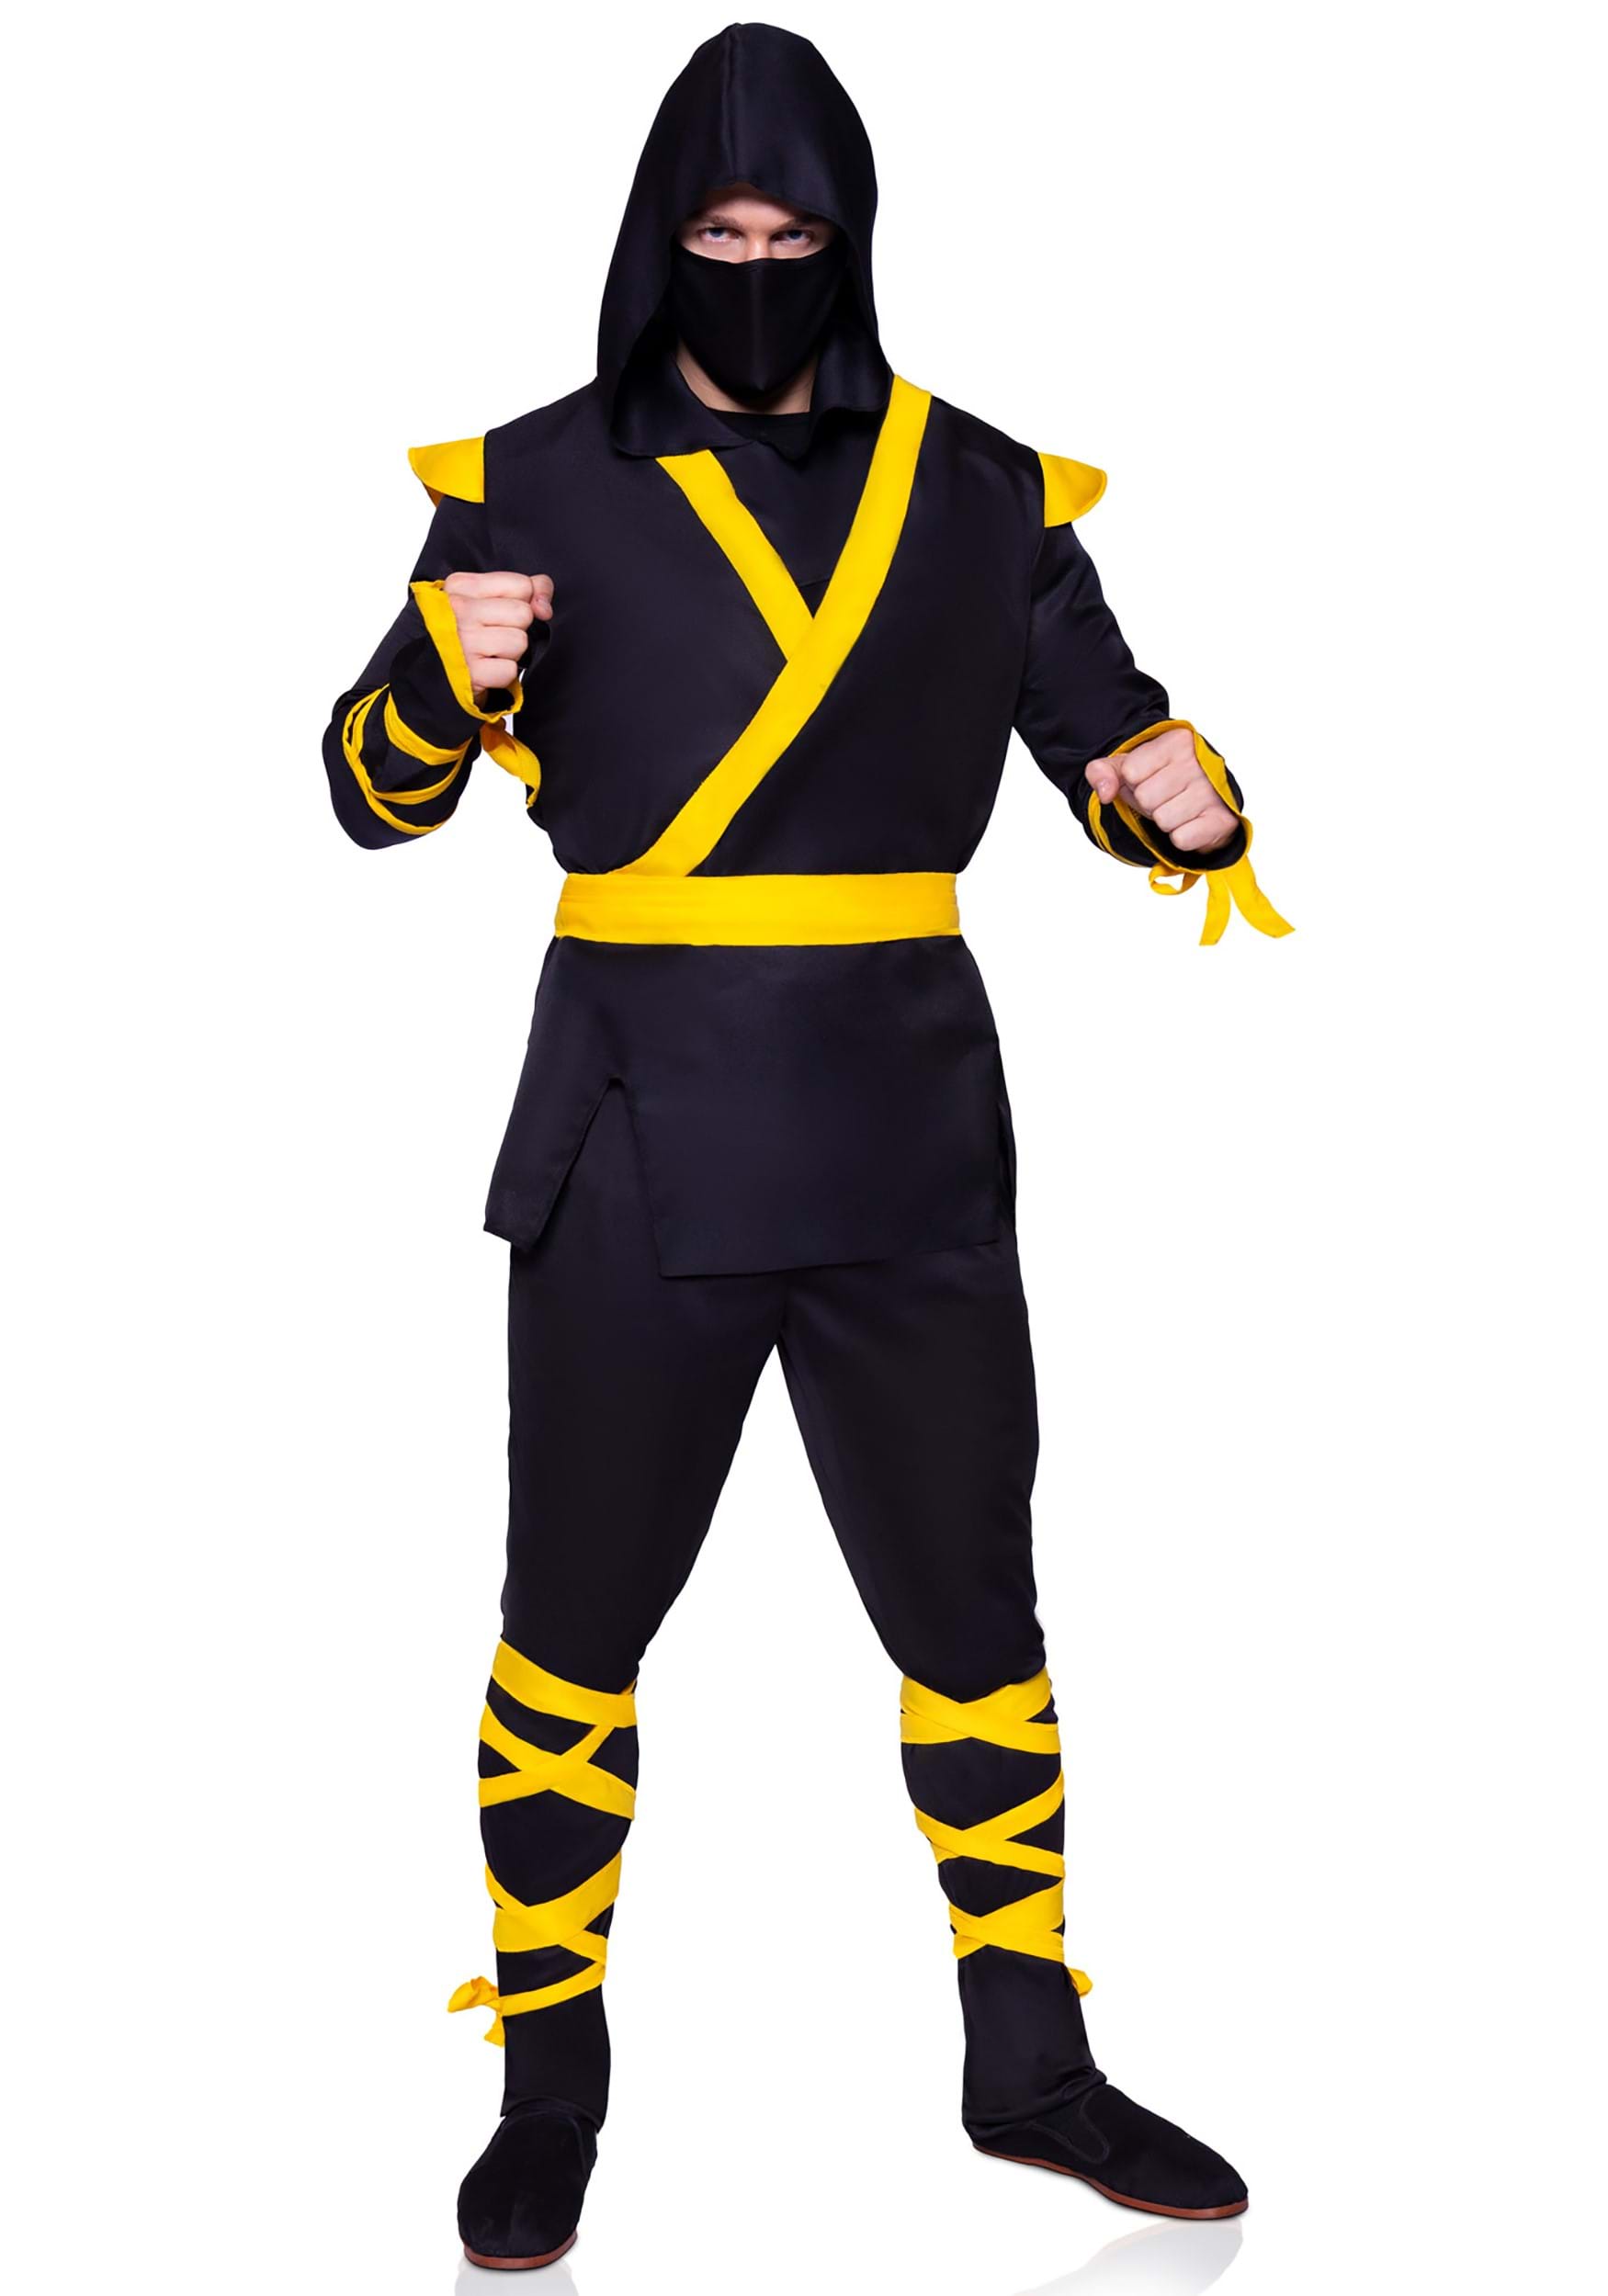 https://images.halloweencostumes.com/products/82811/1-1/mens-yellow-ninja-costume.jpg